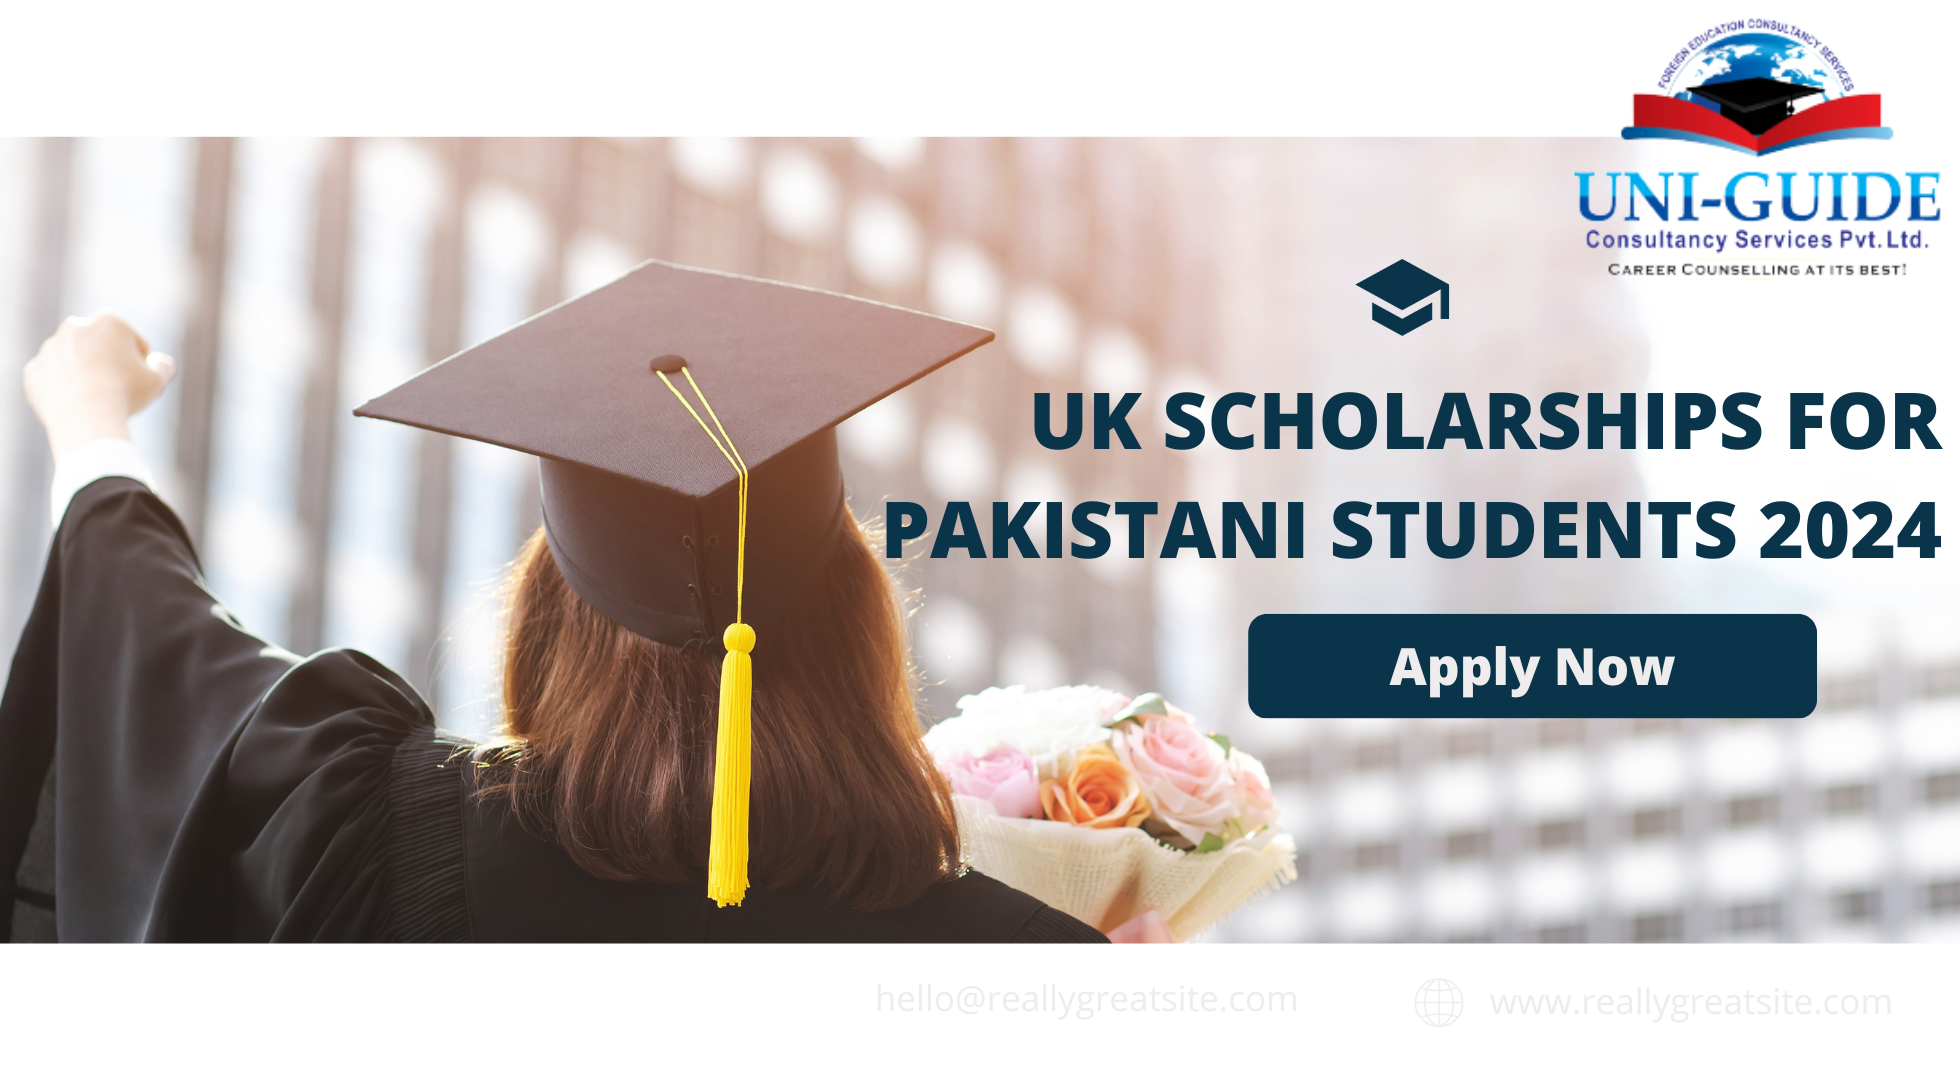 UK Scholarship for Pakistani Students in 2024